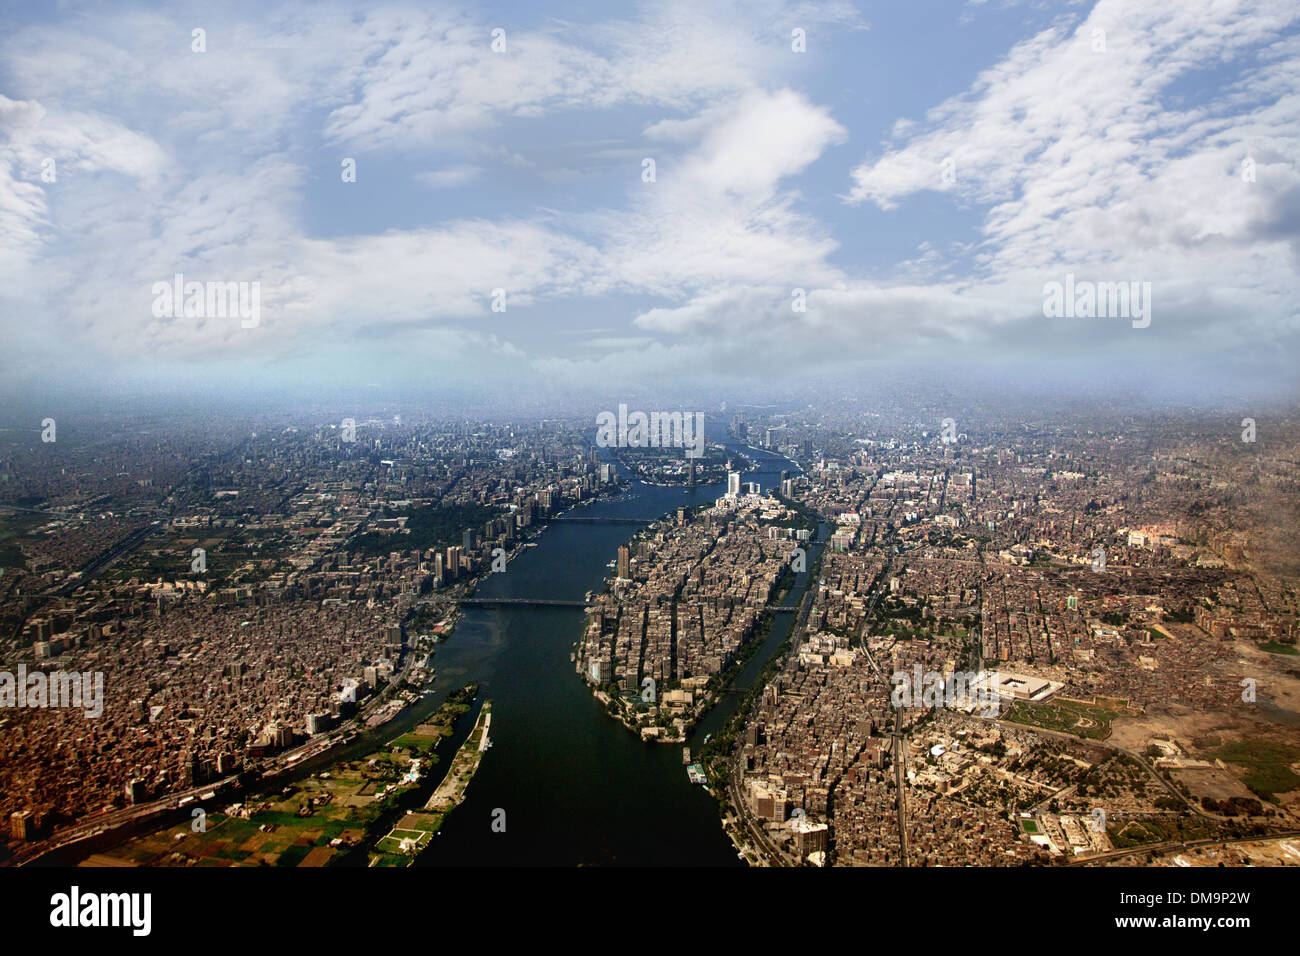 Cairo, Egypt, above, aircraft, buildings, crowd, pollution, nile, river, imbaba, zamalek, shobra, landscape Stock Photo